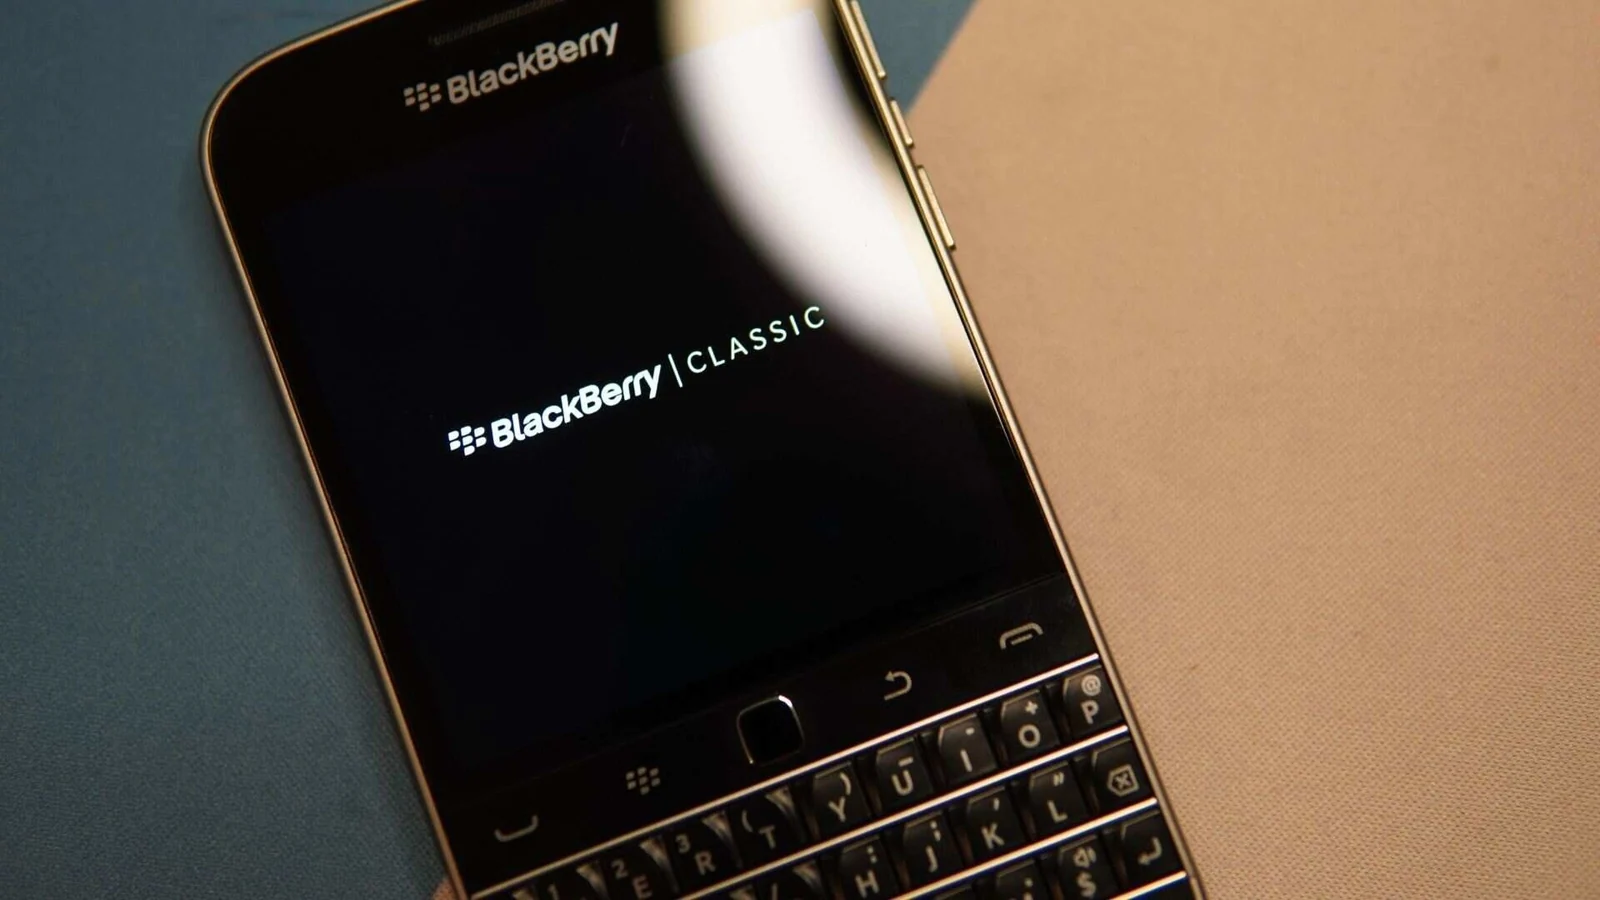 Blackberry mobile classic